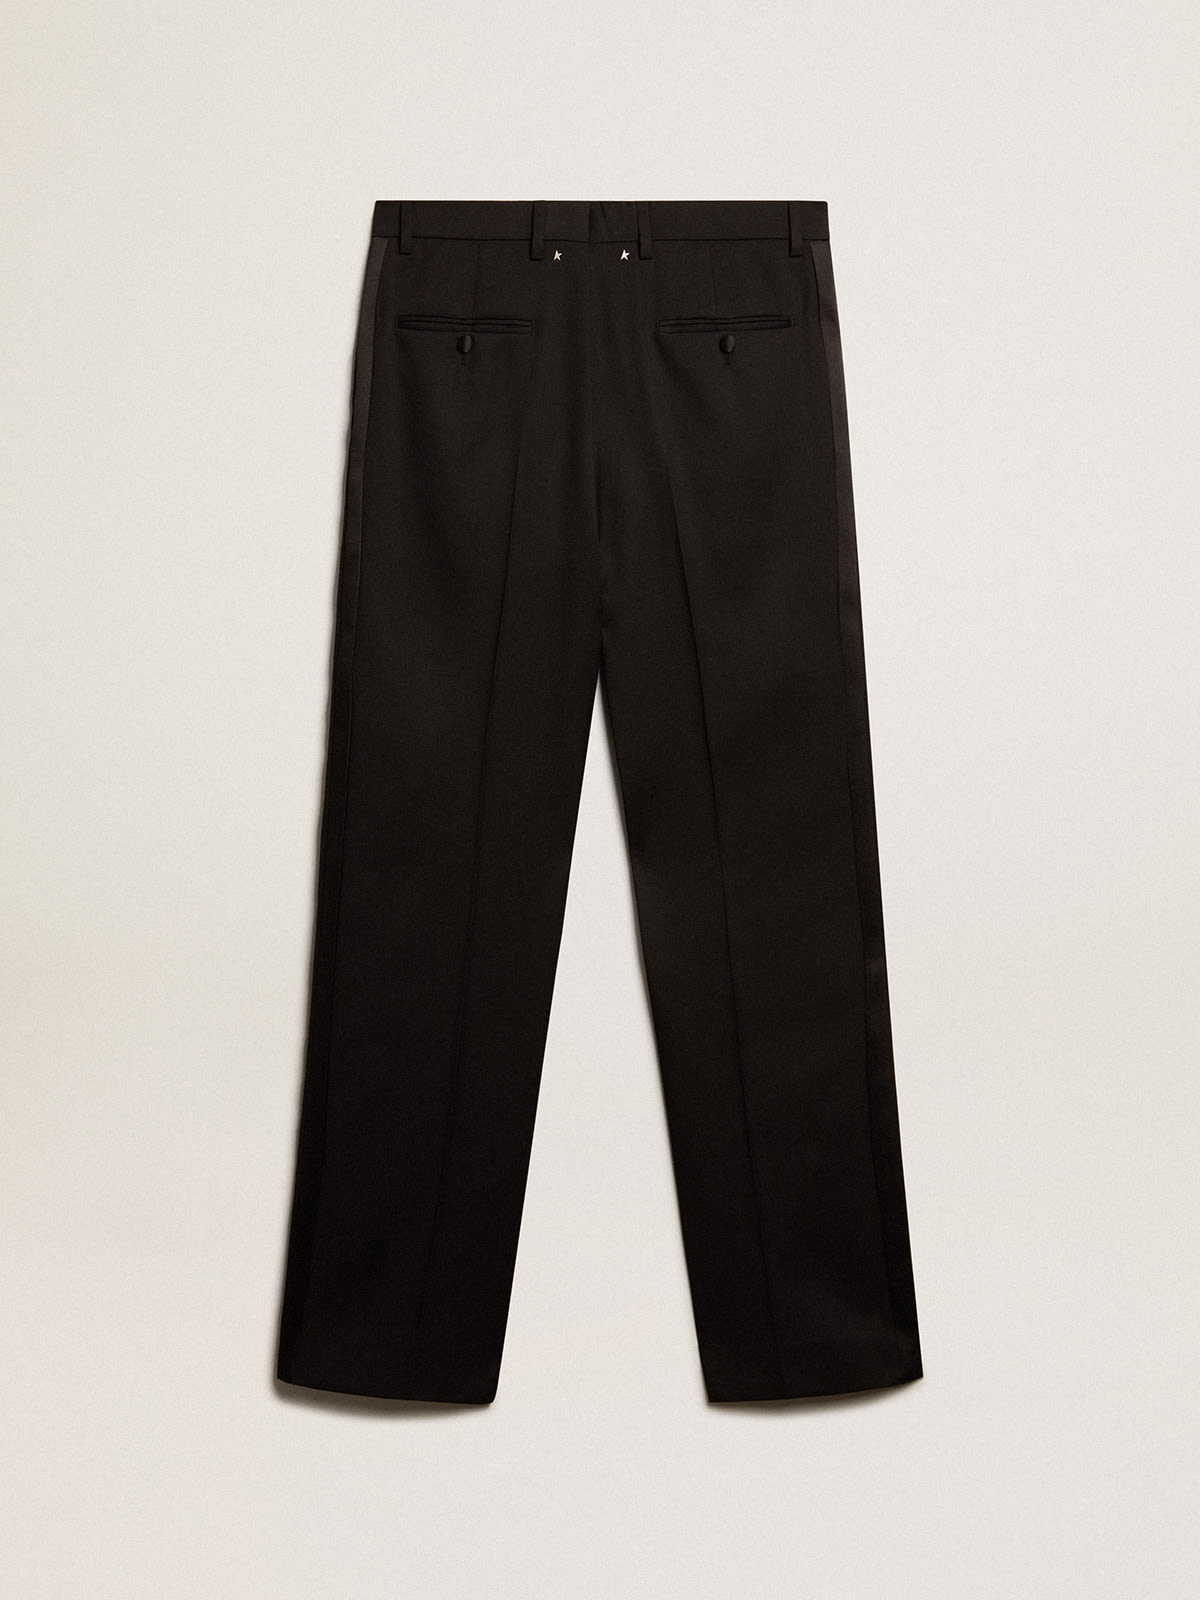 Golden Goose - Men’s tuxedo pants in black wool gabardine in 